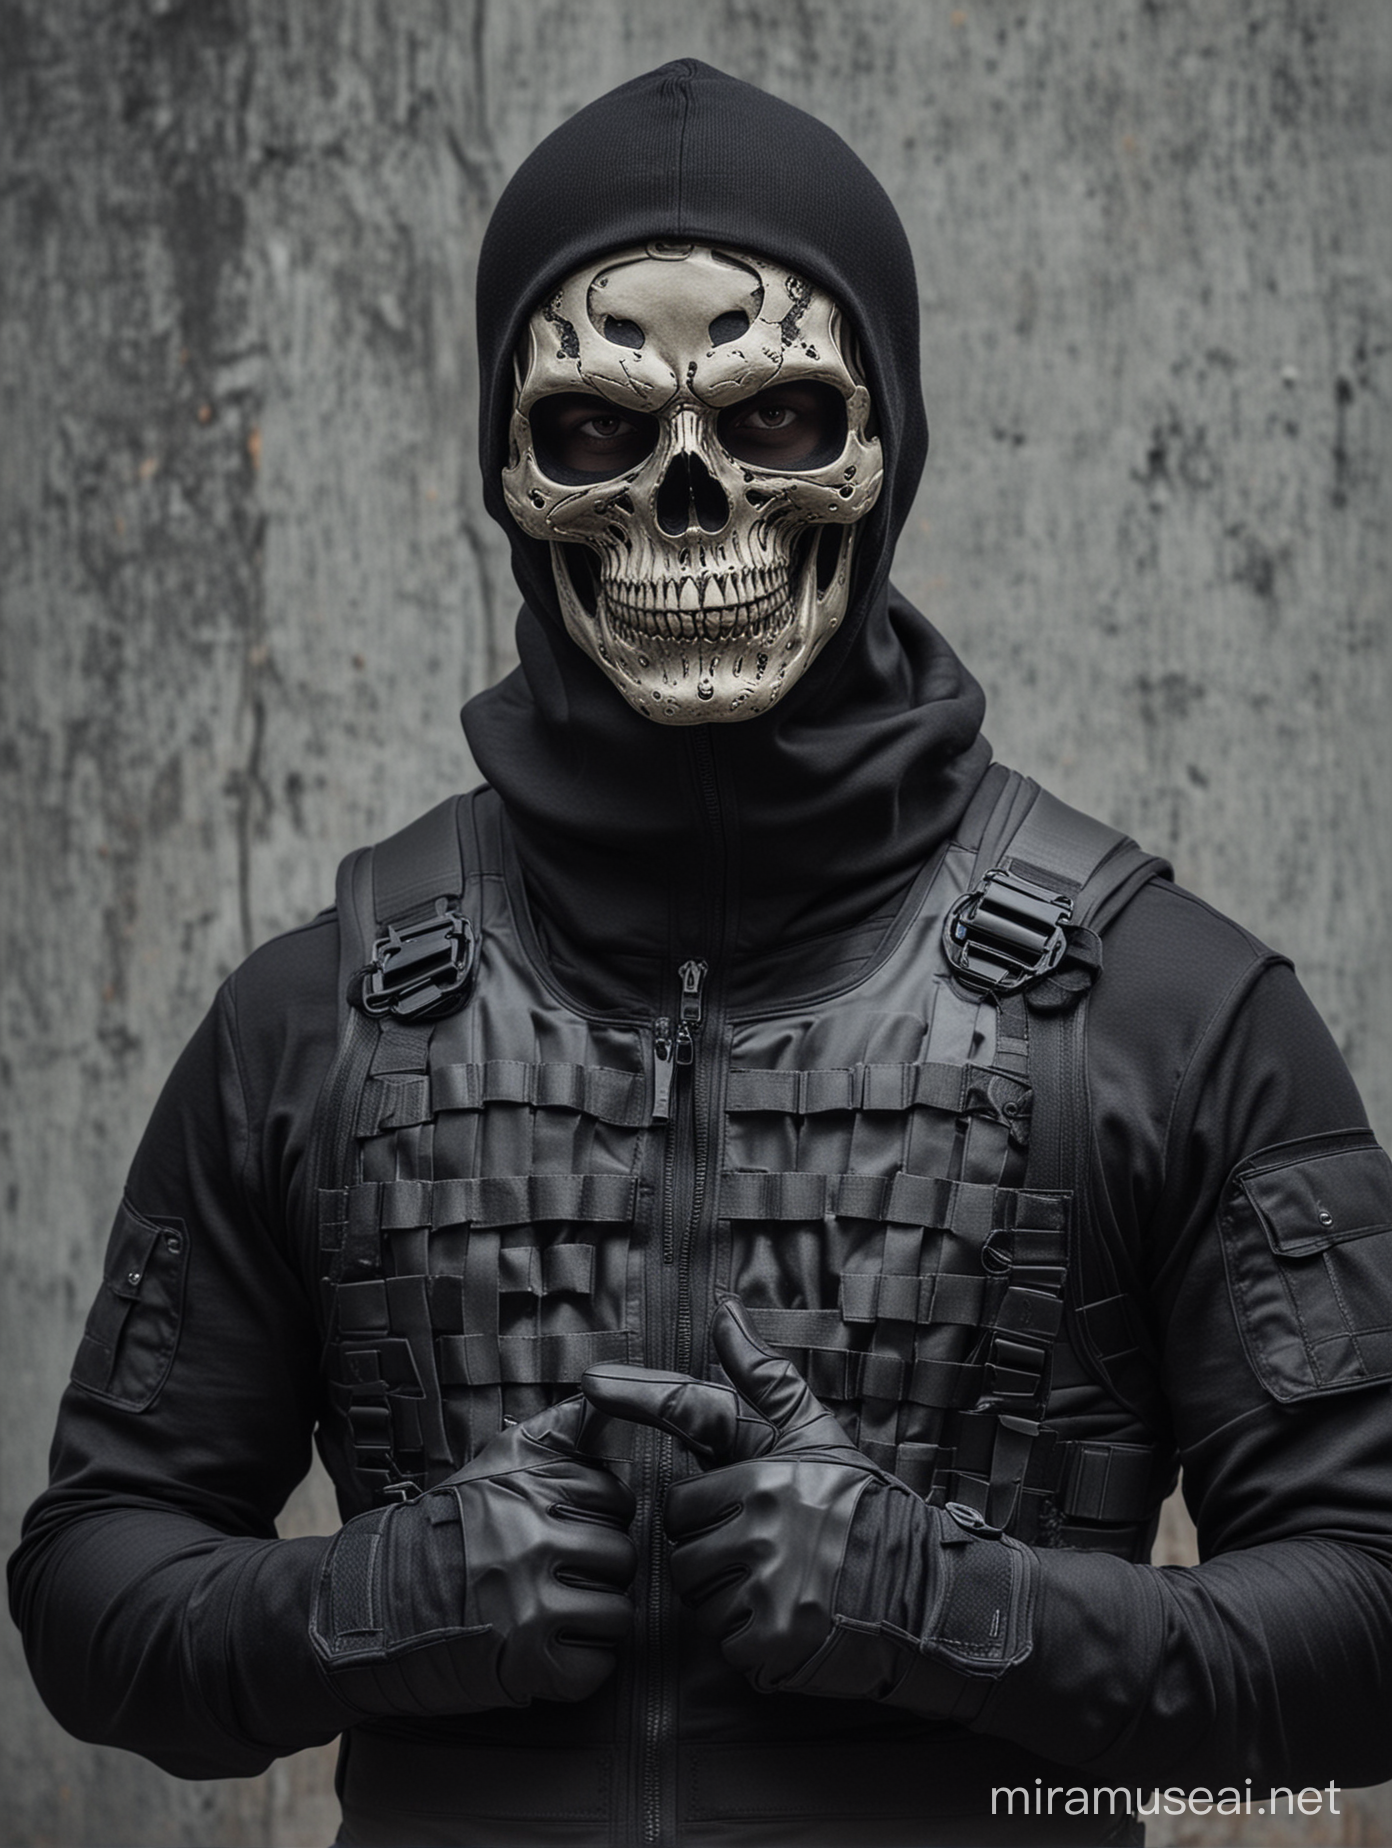 Masked Man in Skull Balaclava and Bulletproof Vest